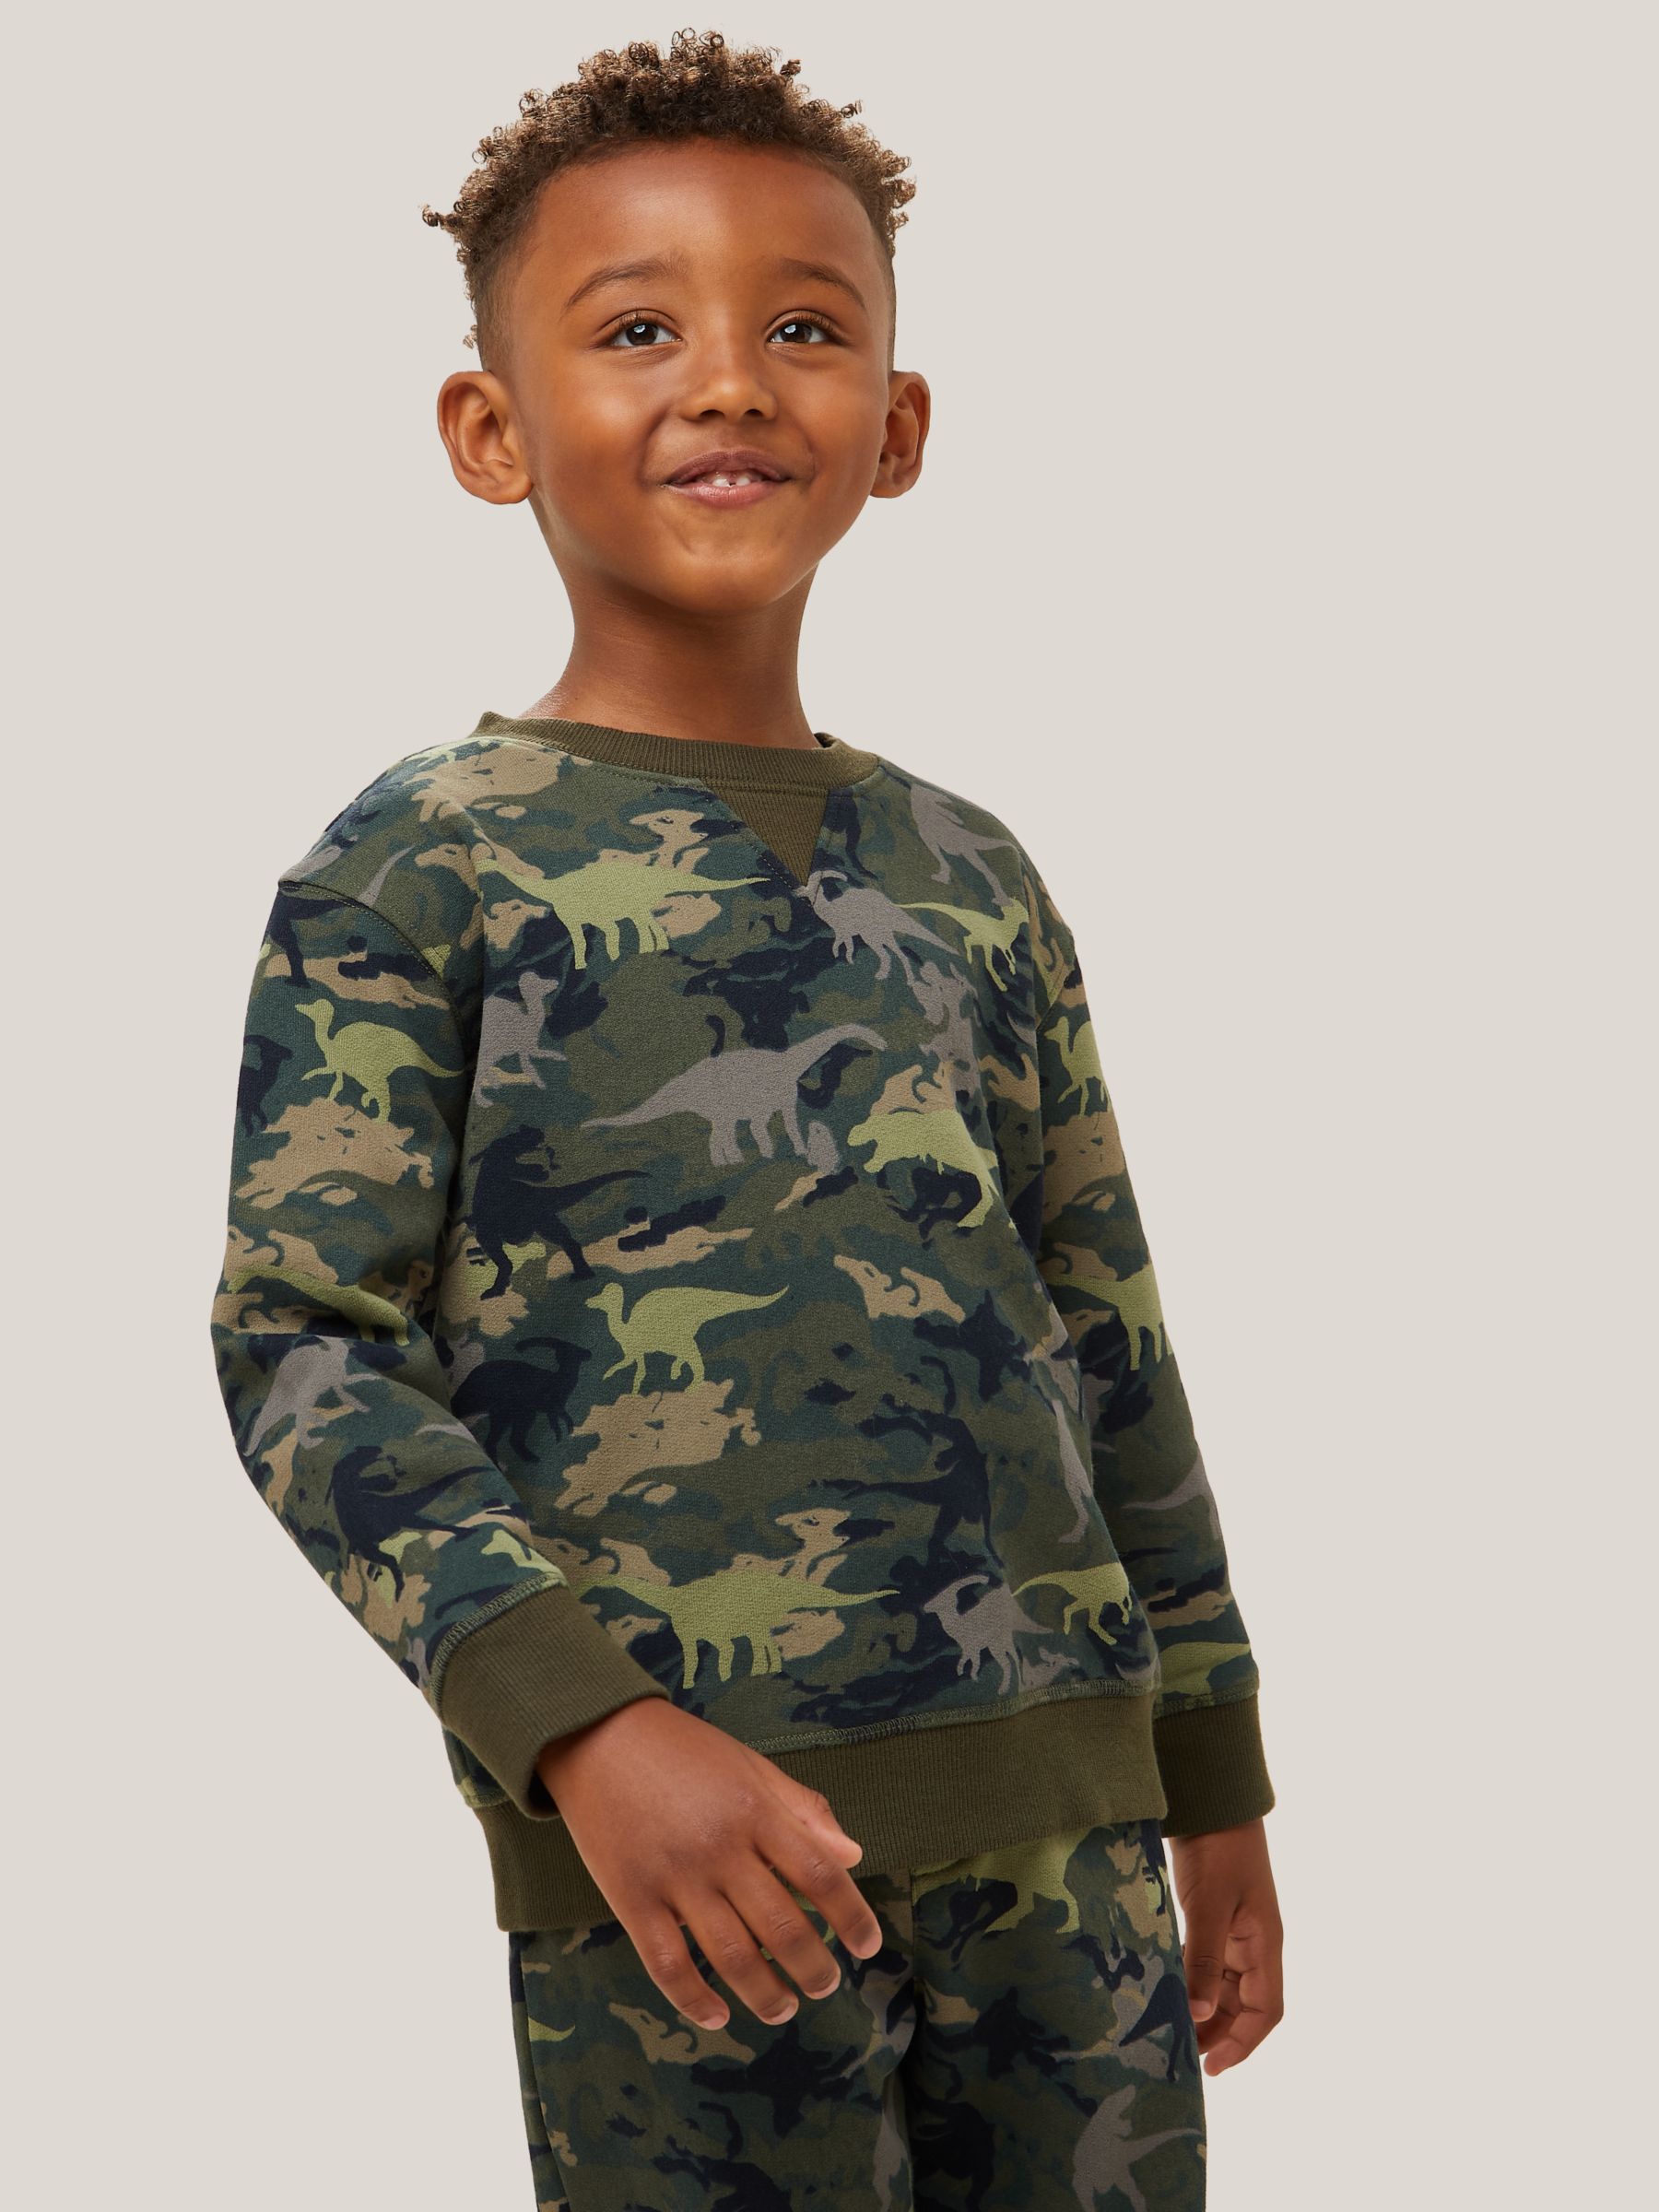 John Lewis Kids' Camouflage Dinosaur Jumper, Khaki